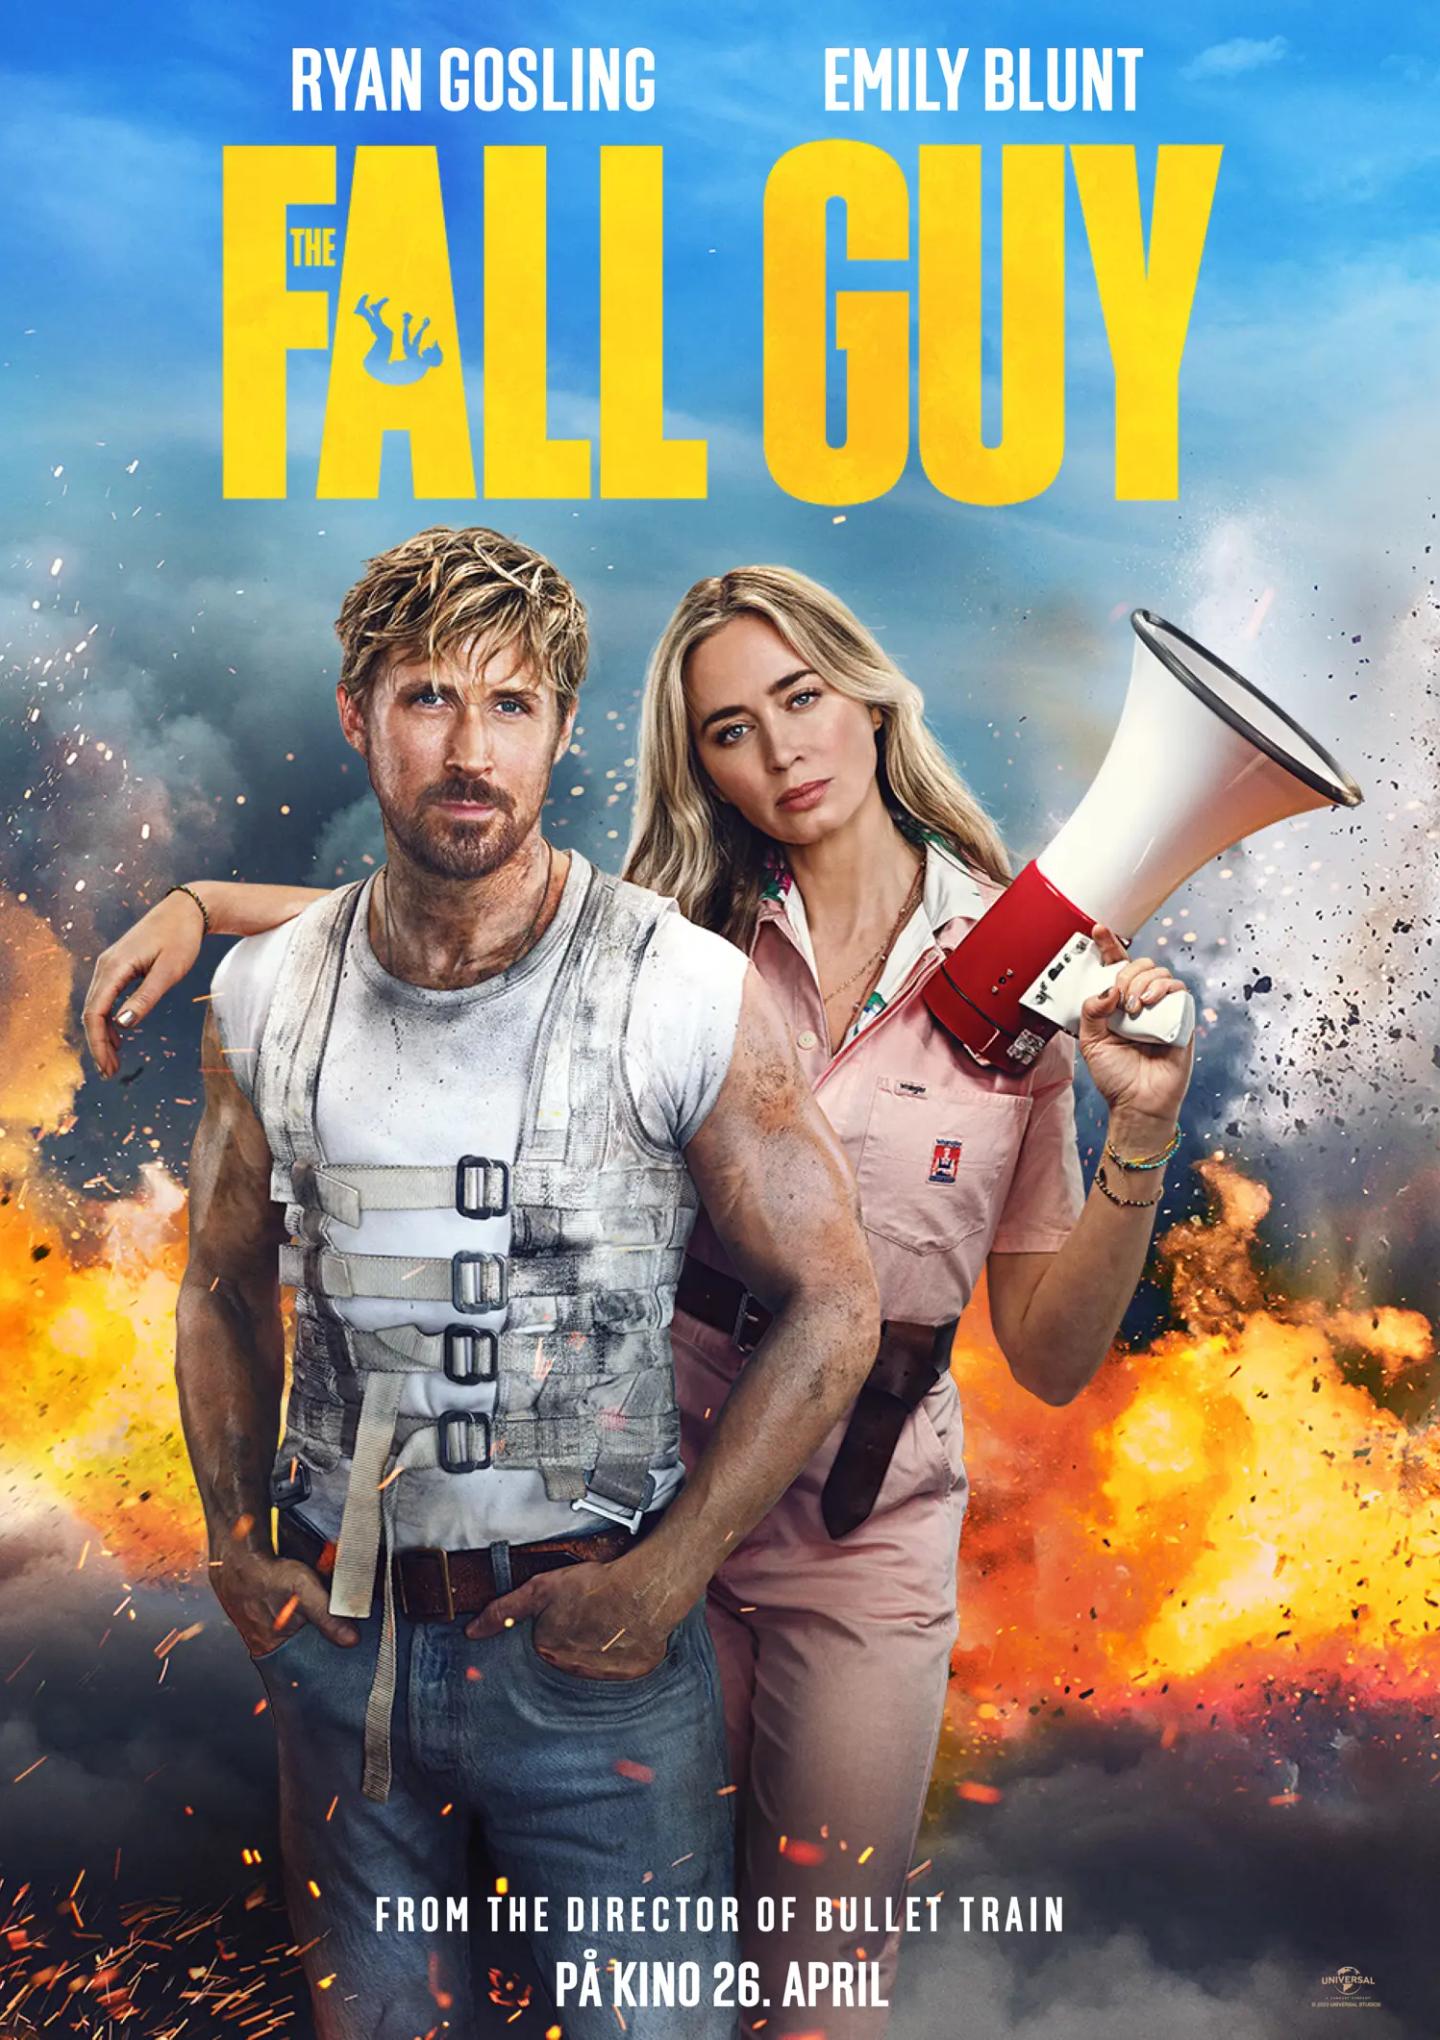 Plakat for 'The Fall Guy'